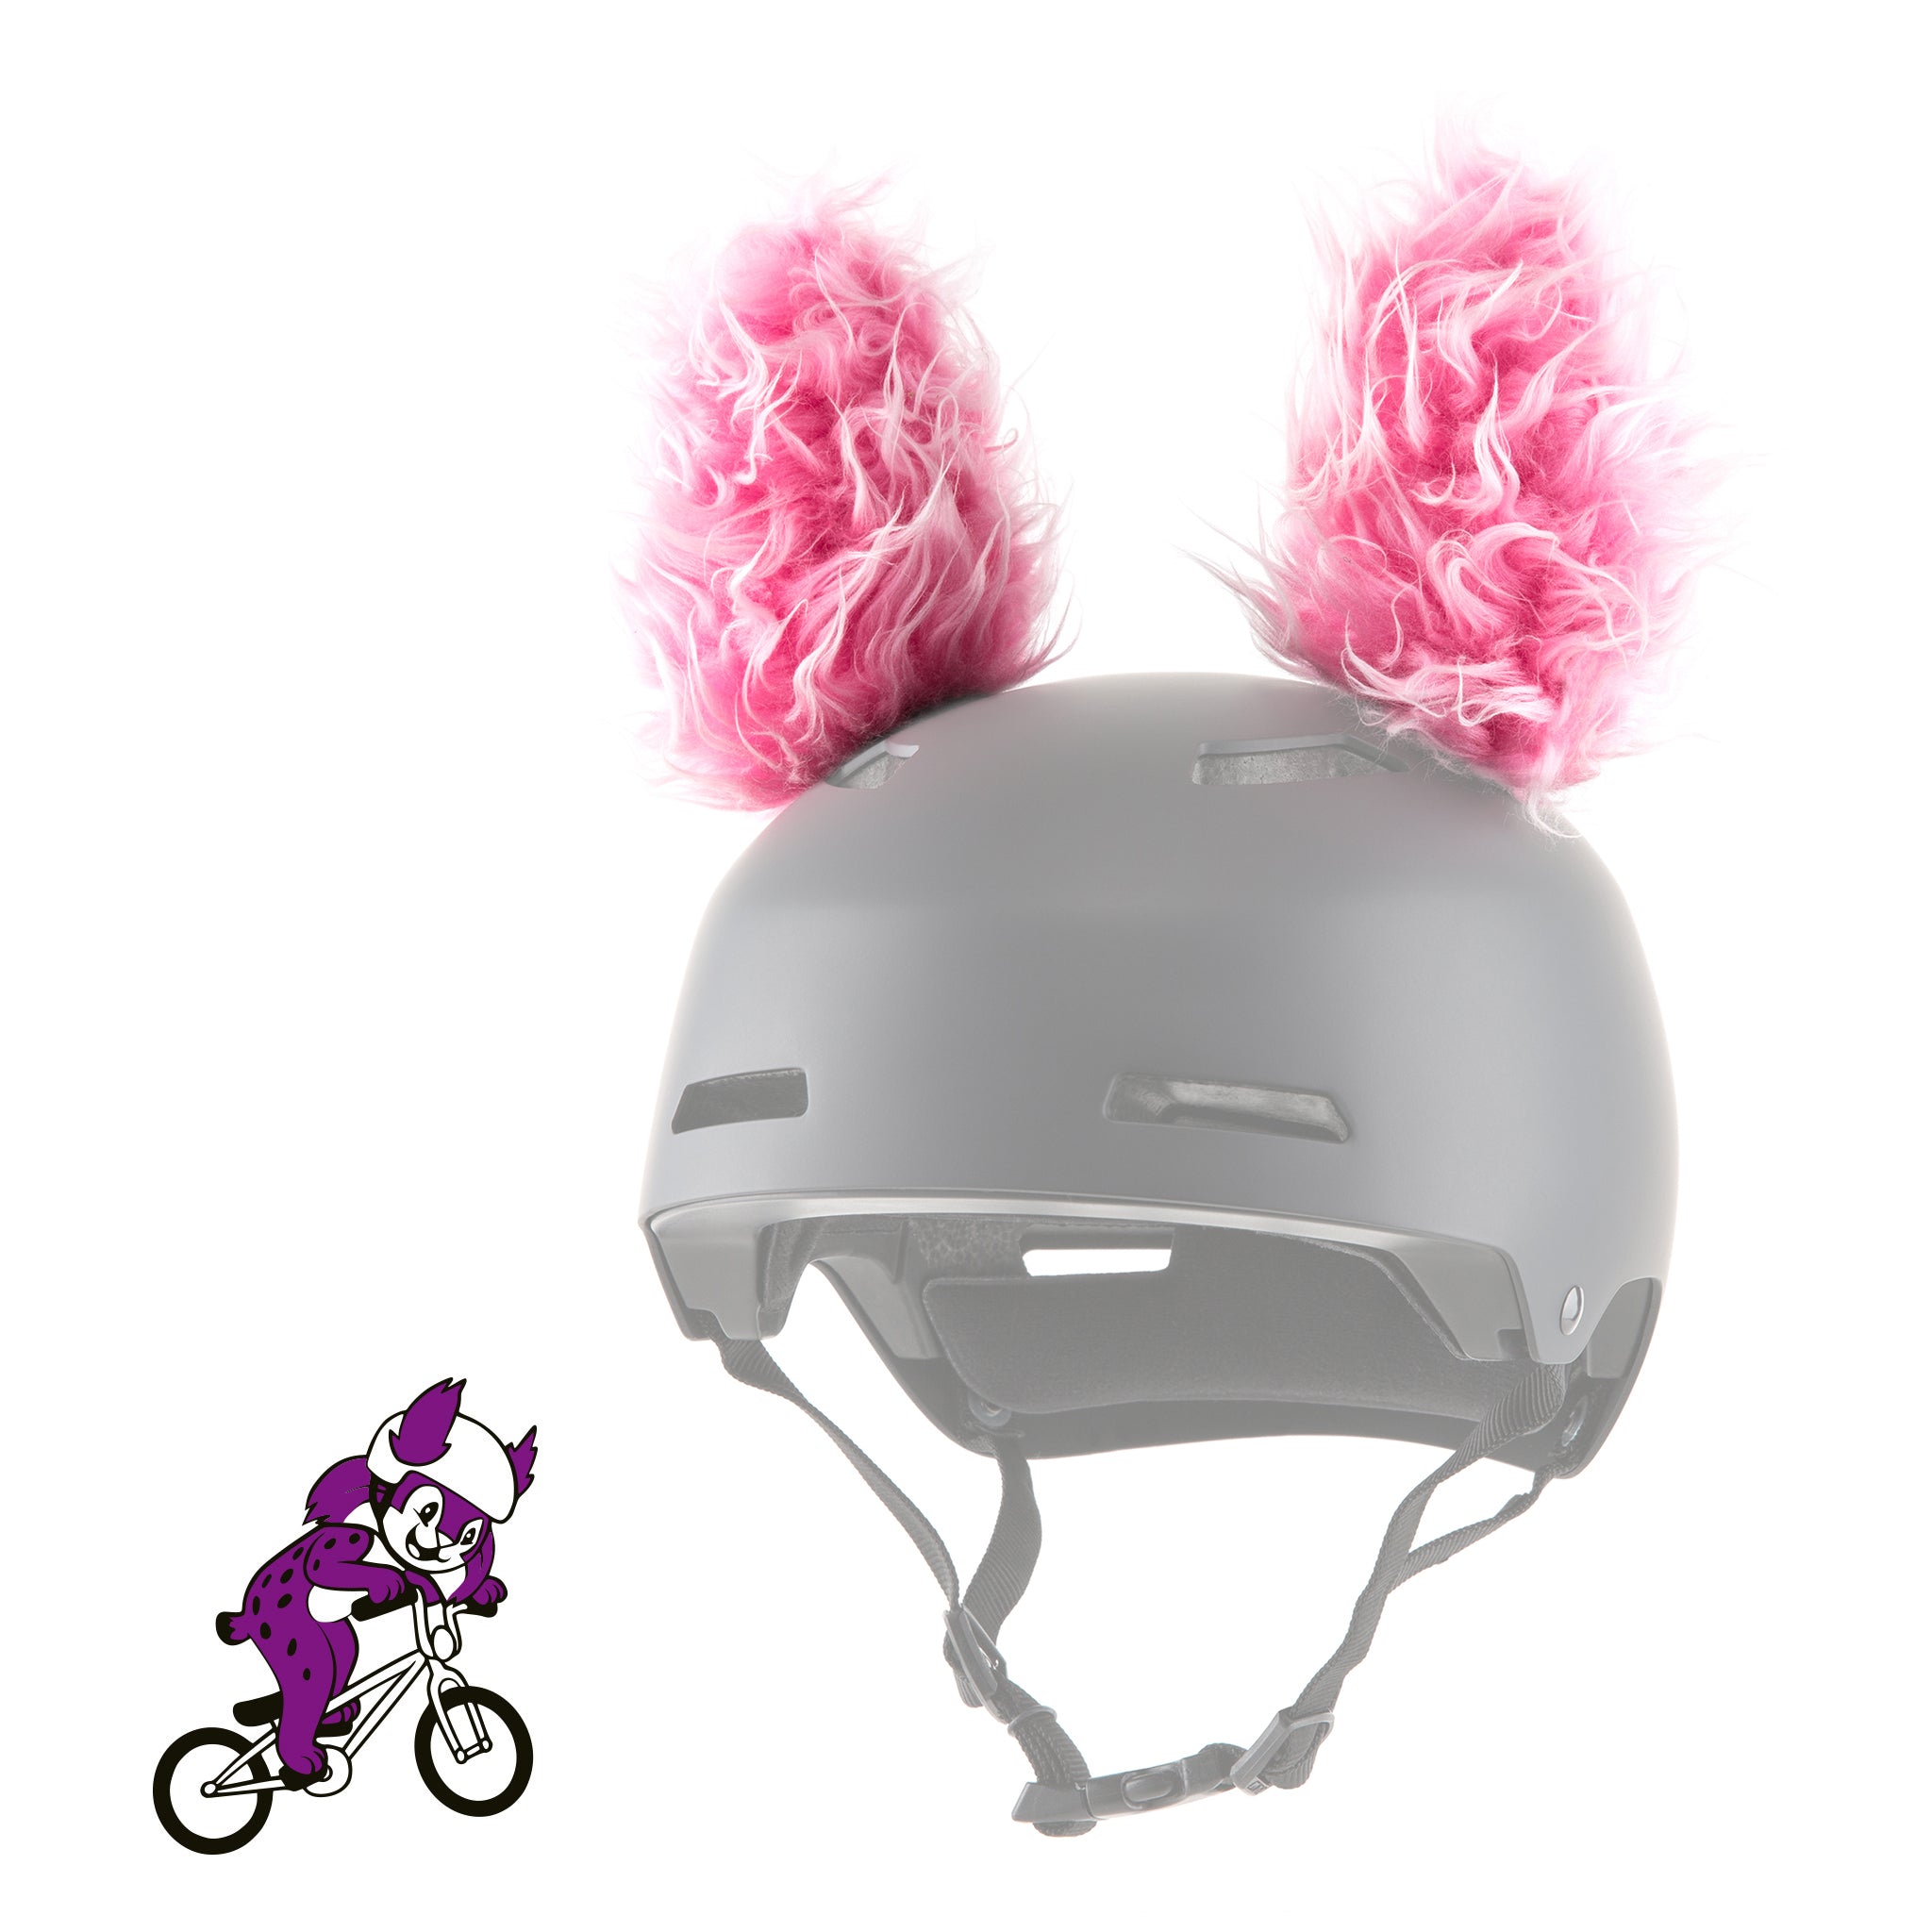 Feli the Lynx Helmet Ears/Covers Accessory in Pink